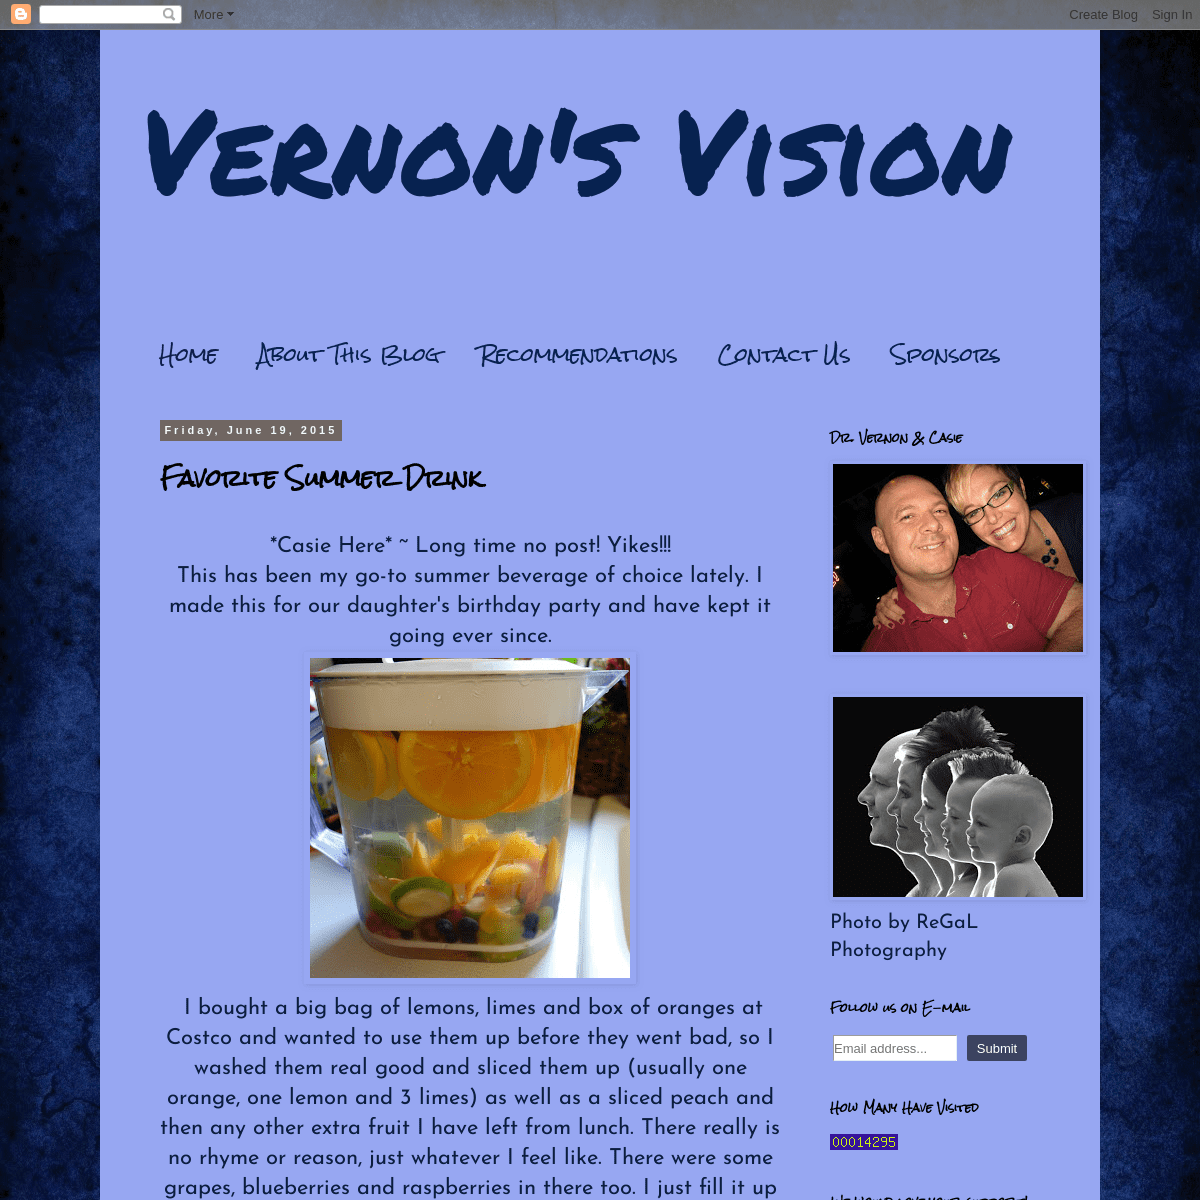 A complete backup of vernonsvision.blogspot.com